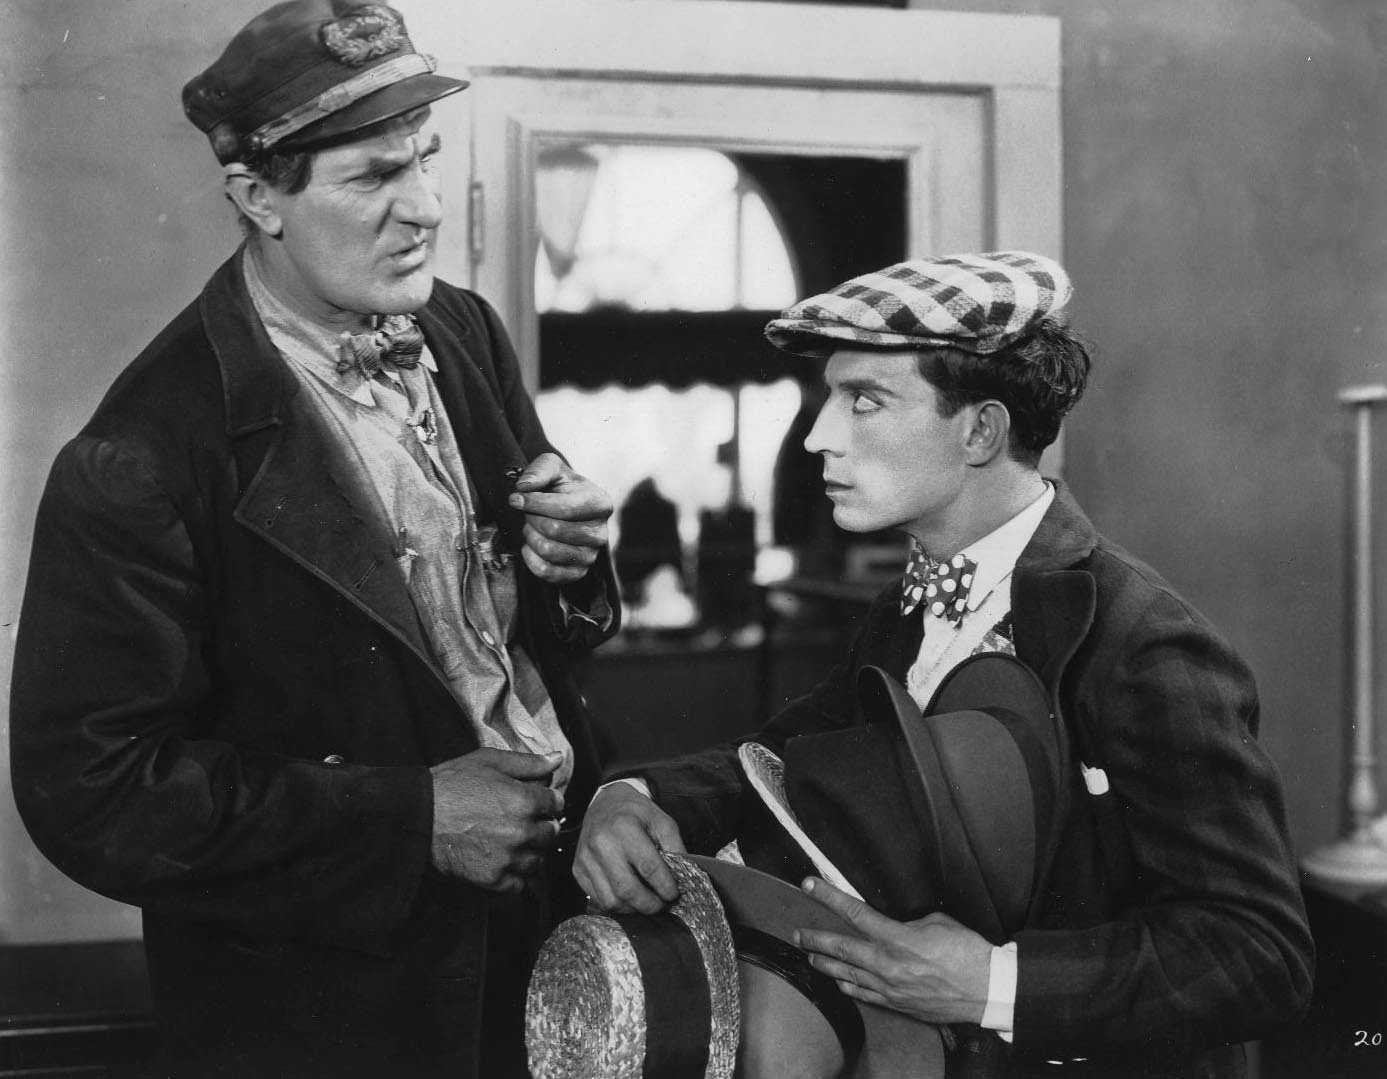 Still of Buster Keaton in Steamboat Bill, Jr. (1928)